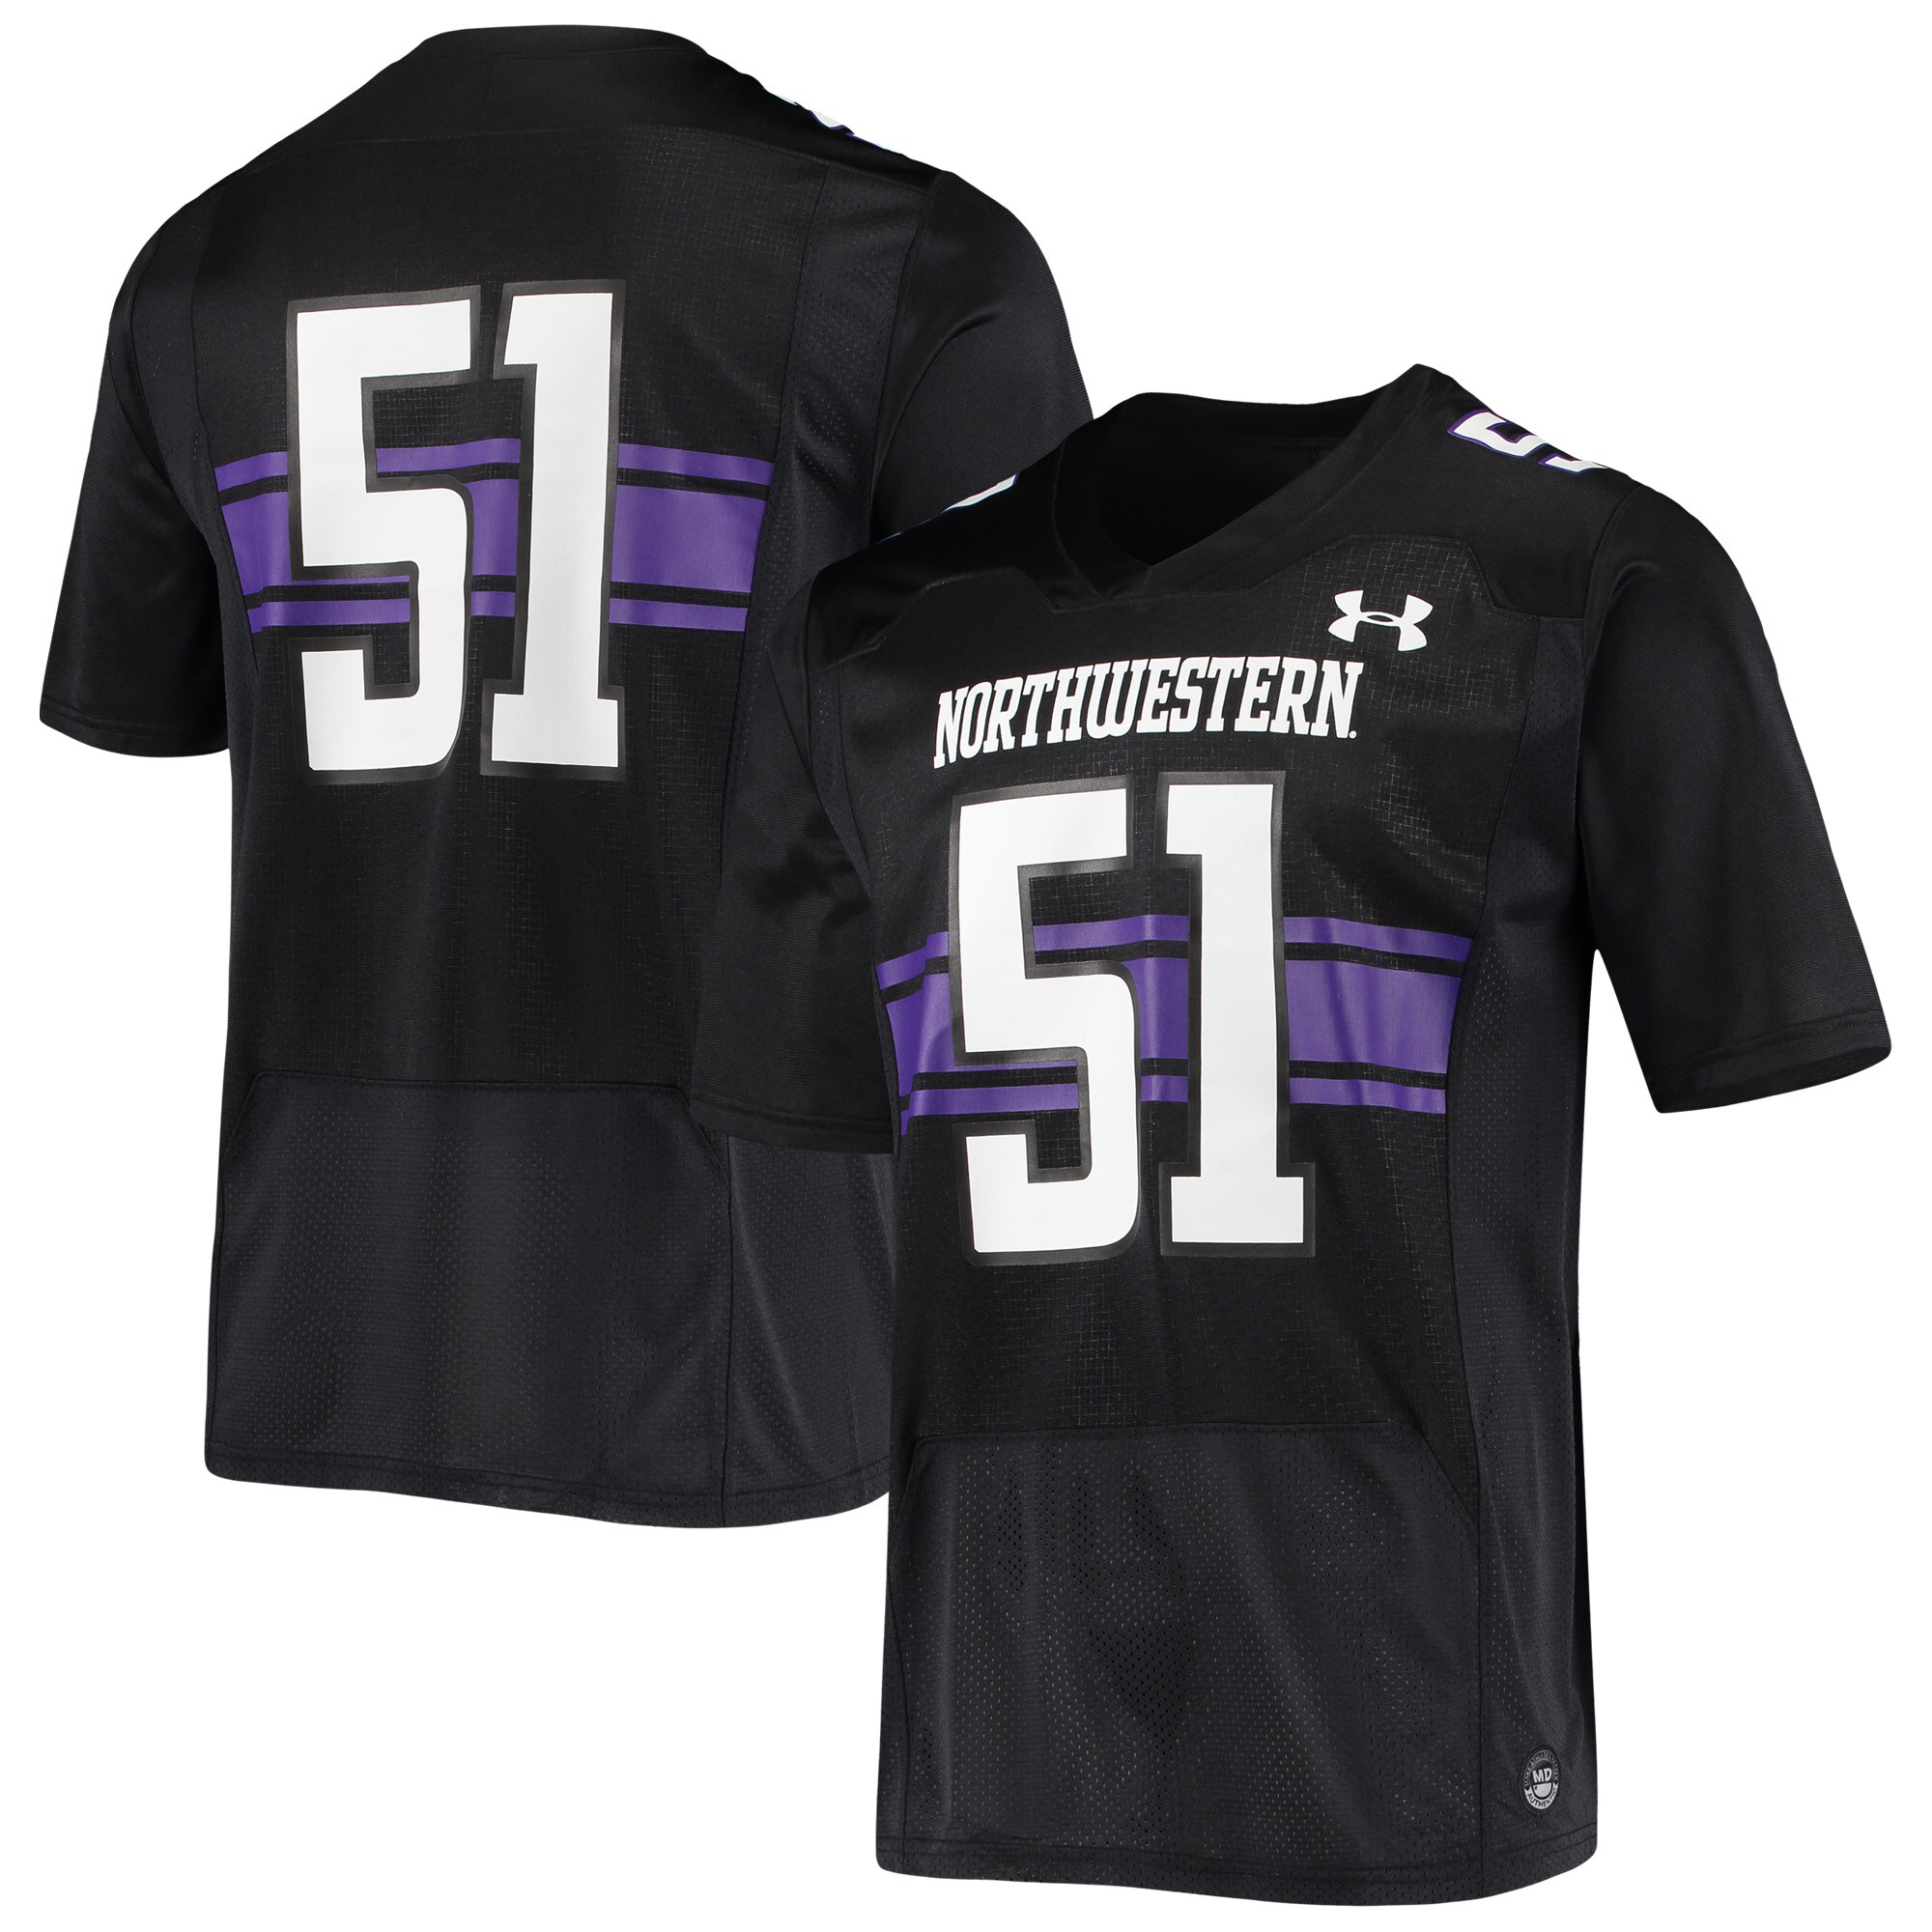 #51 Northwestern Wildcats Under Armour Logo Replica  Football Shirts Jersey - Black For Youth Women Men